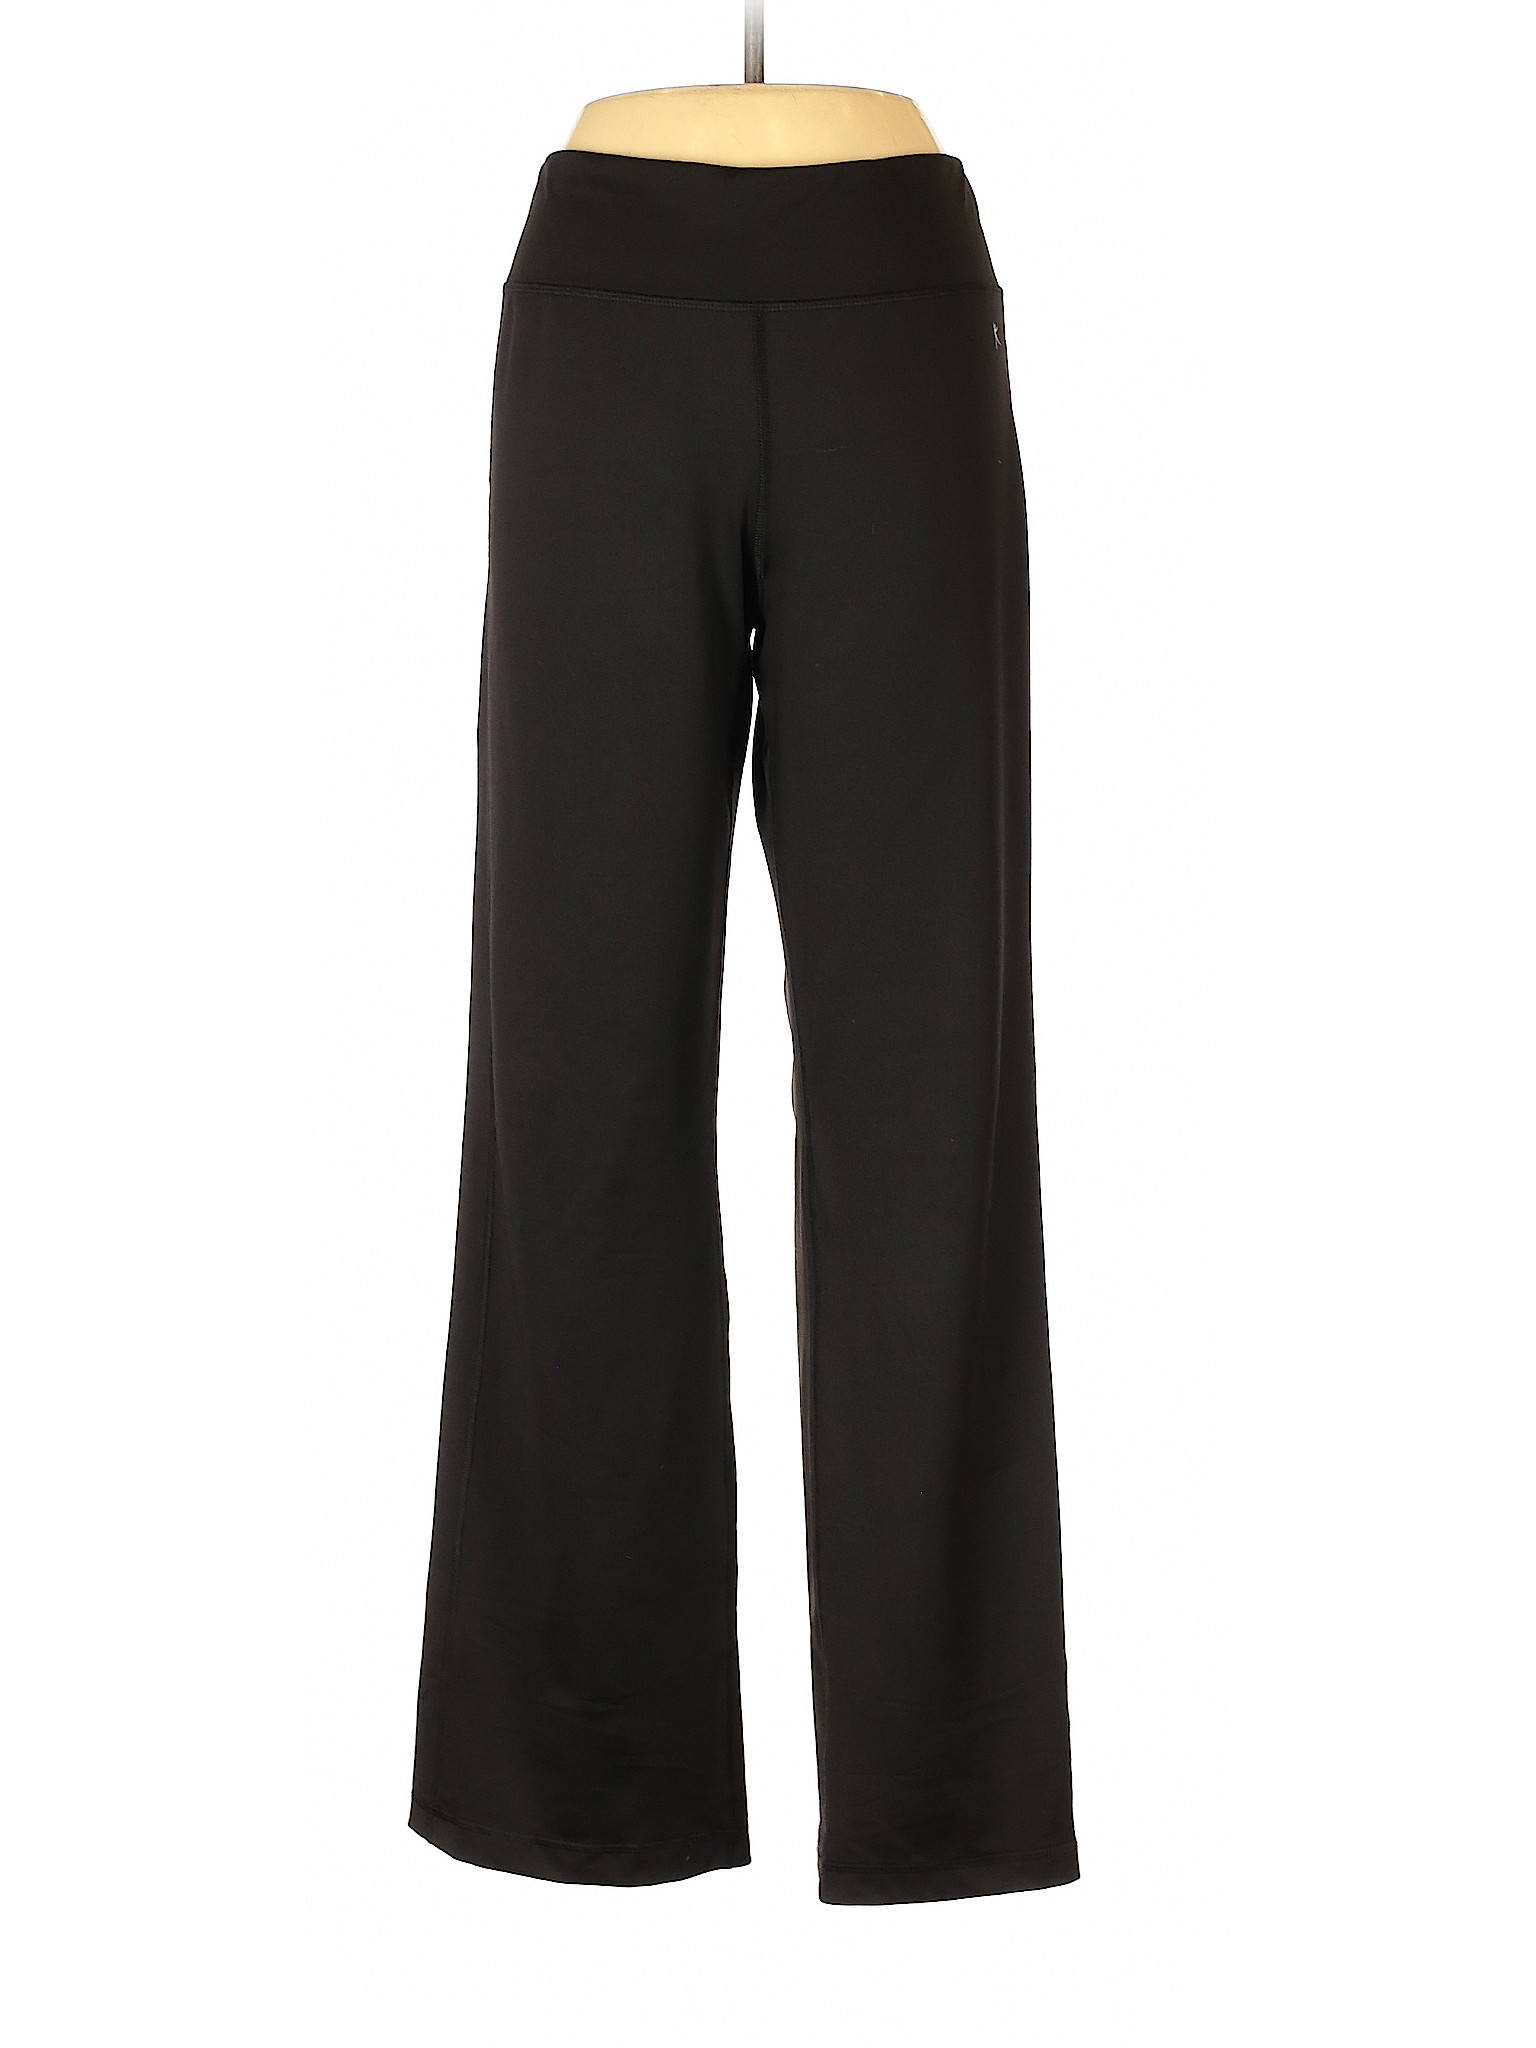 Danskin Now Women Black Active Pants XL | eBay